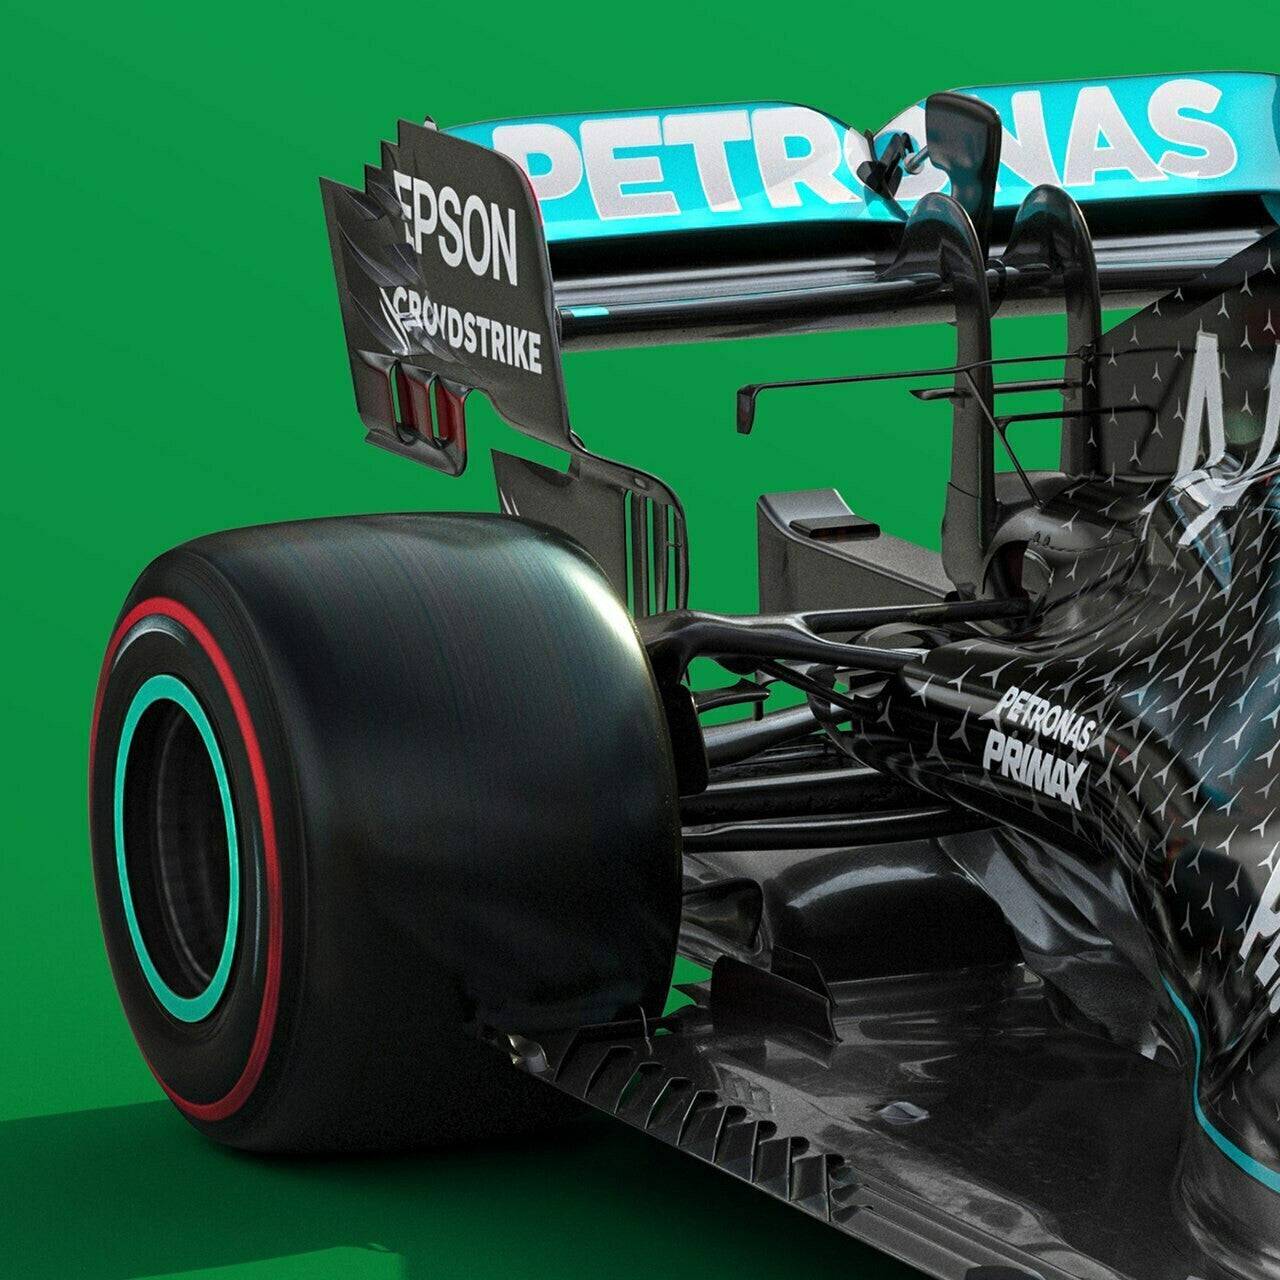 Mercedes-AMG Petronas F1 Team - Imola 2020 - Lewis Hamilton | Collector’s Edition